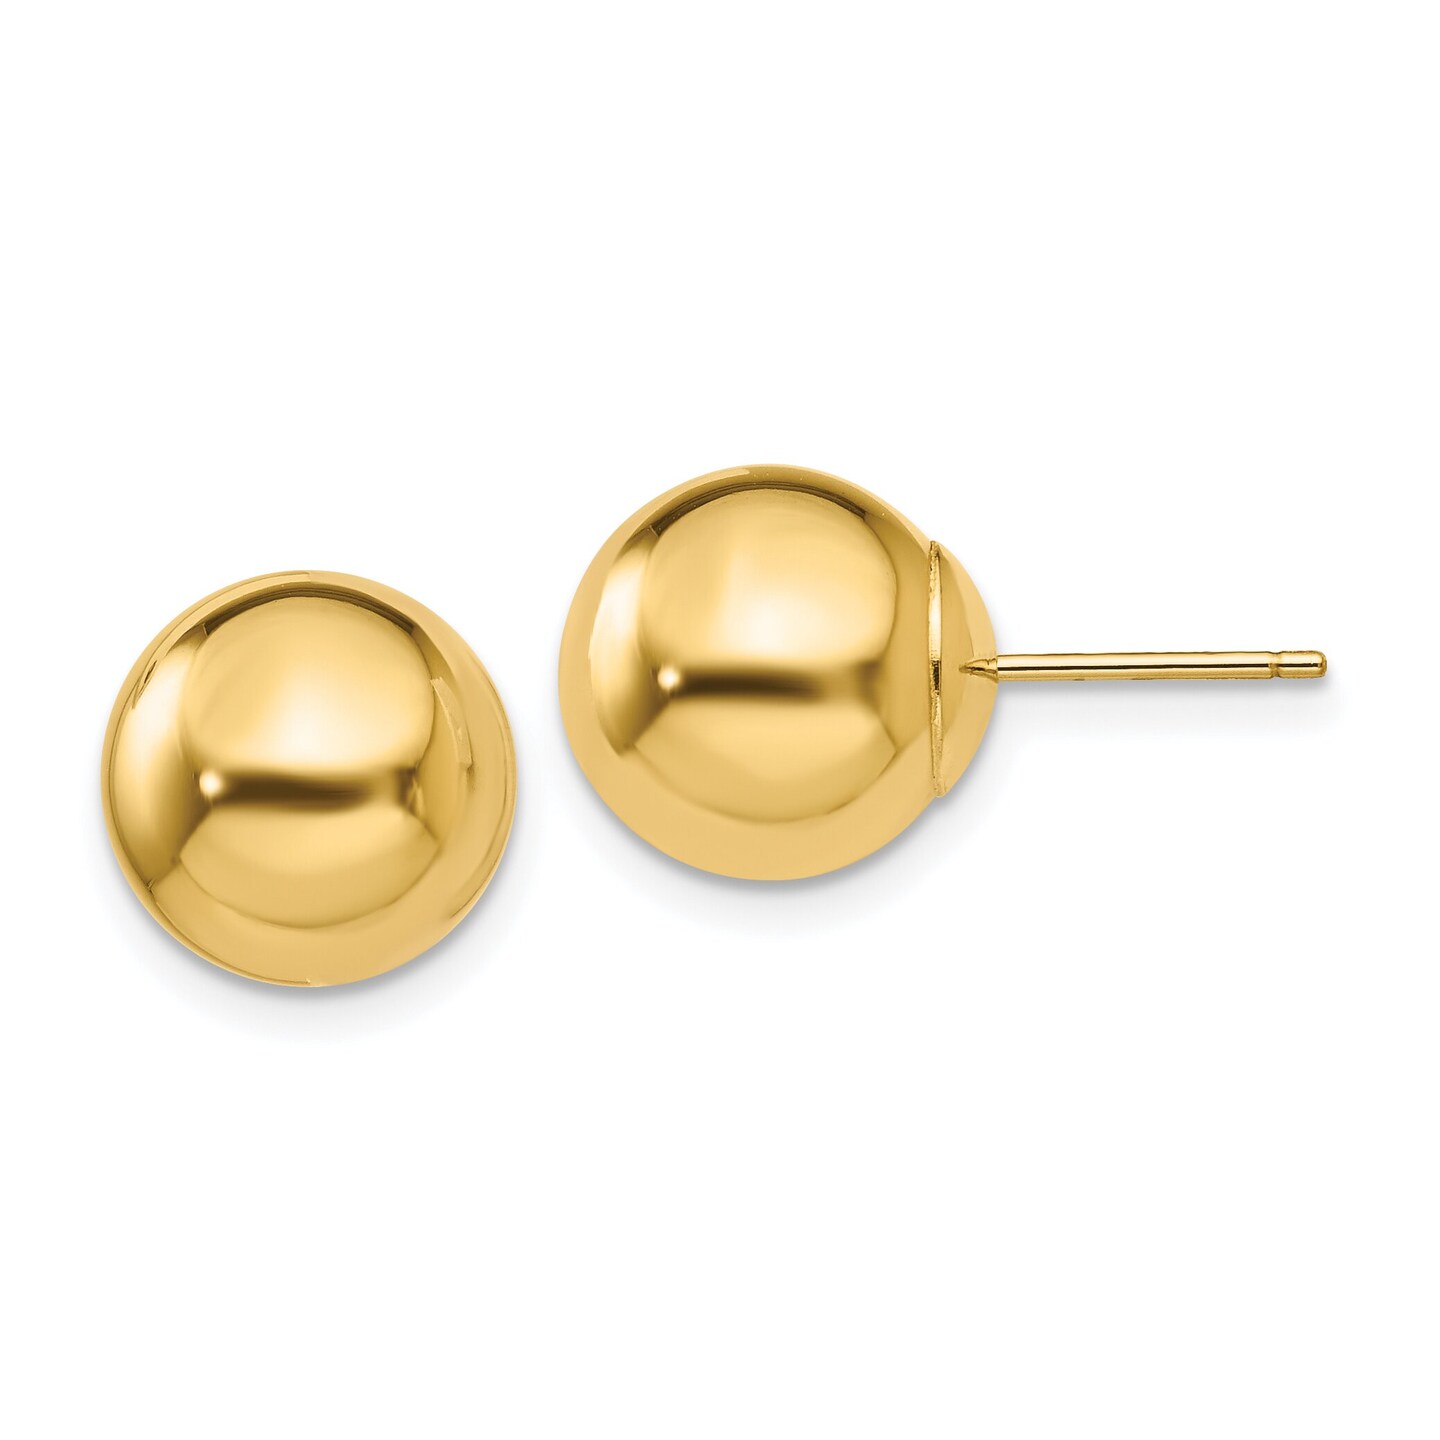 14K Yellow Gold Ball Stud Earrings Jewelry 10mm 10mm x 10mm